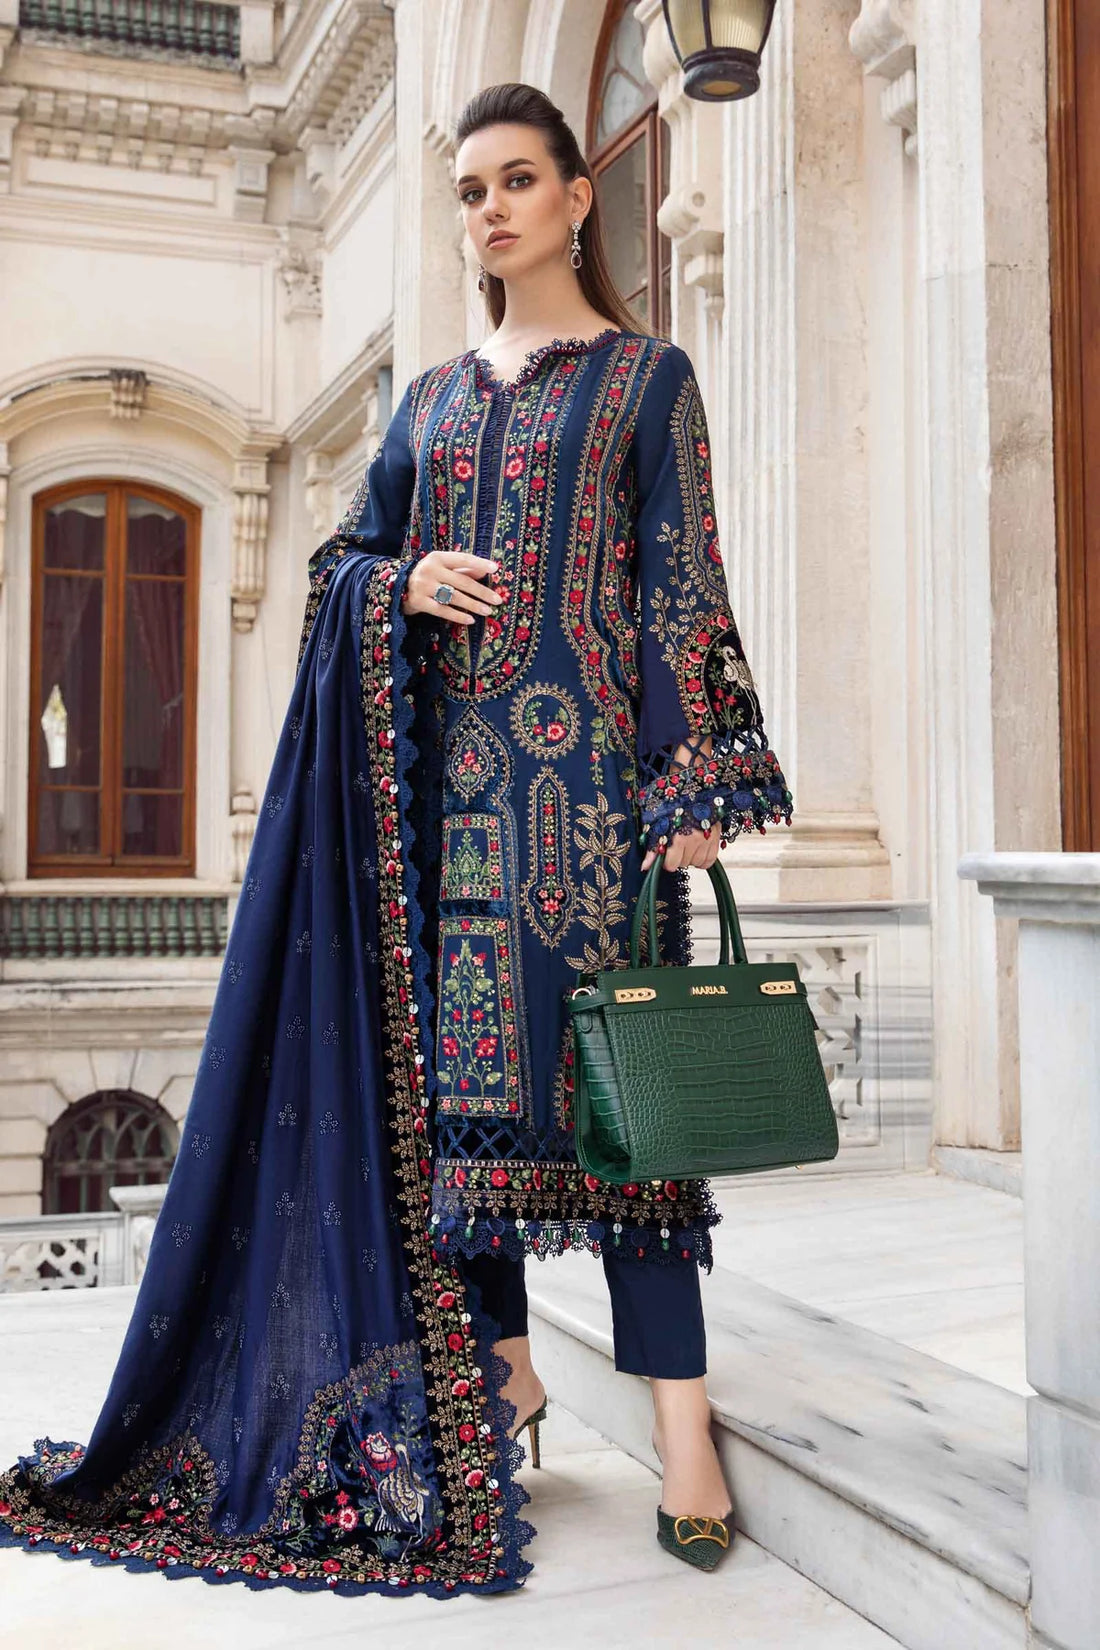 Maria B | Linen 23 | Navy Blue DL-1109 - Khanumjan  Pakistani Clothes and Designer Dresses in UK, USA 